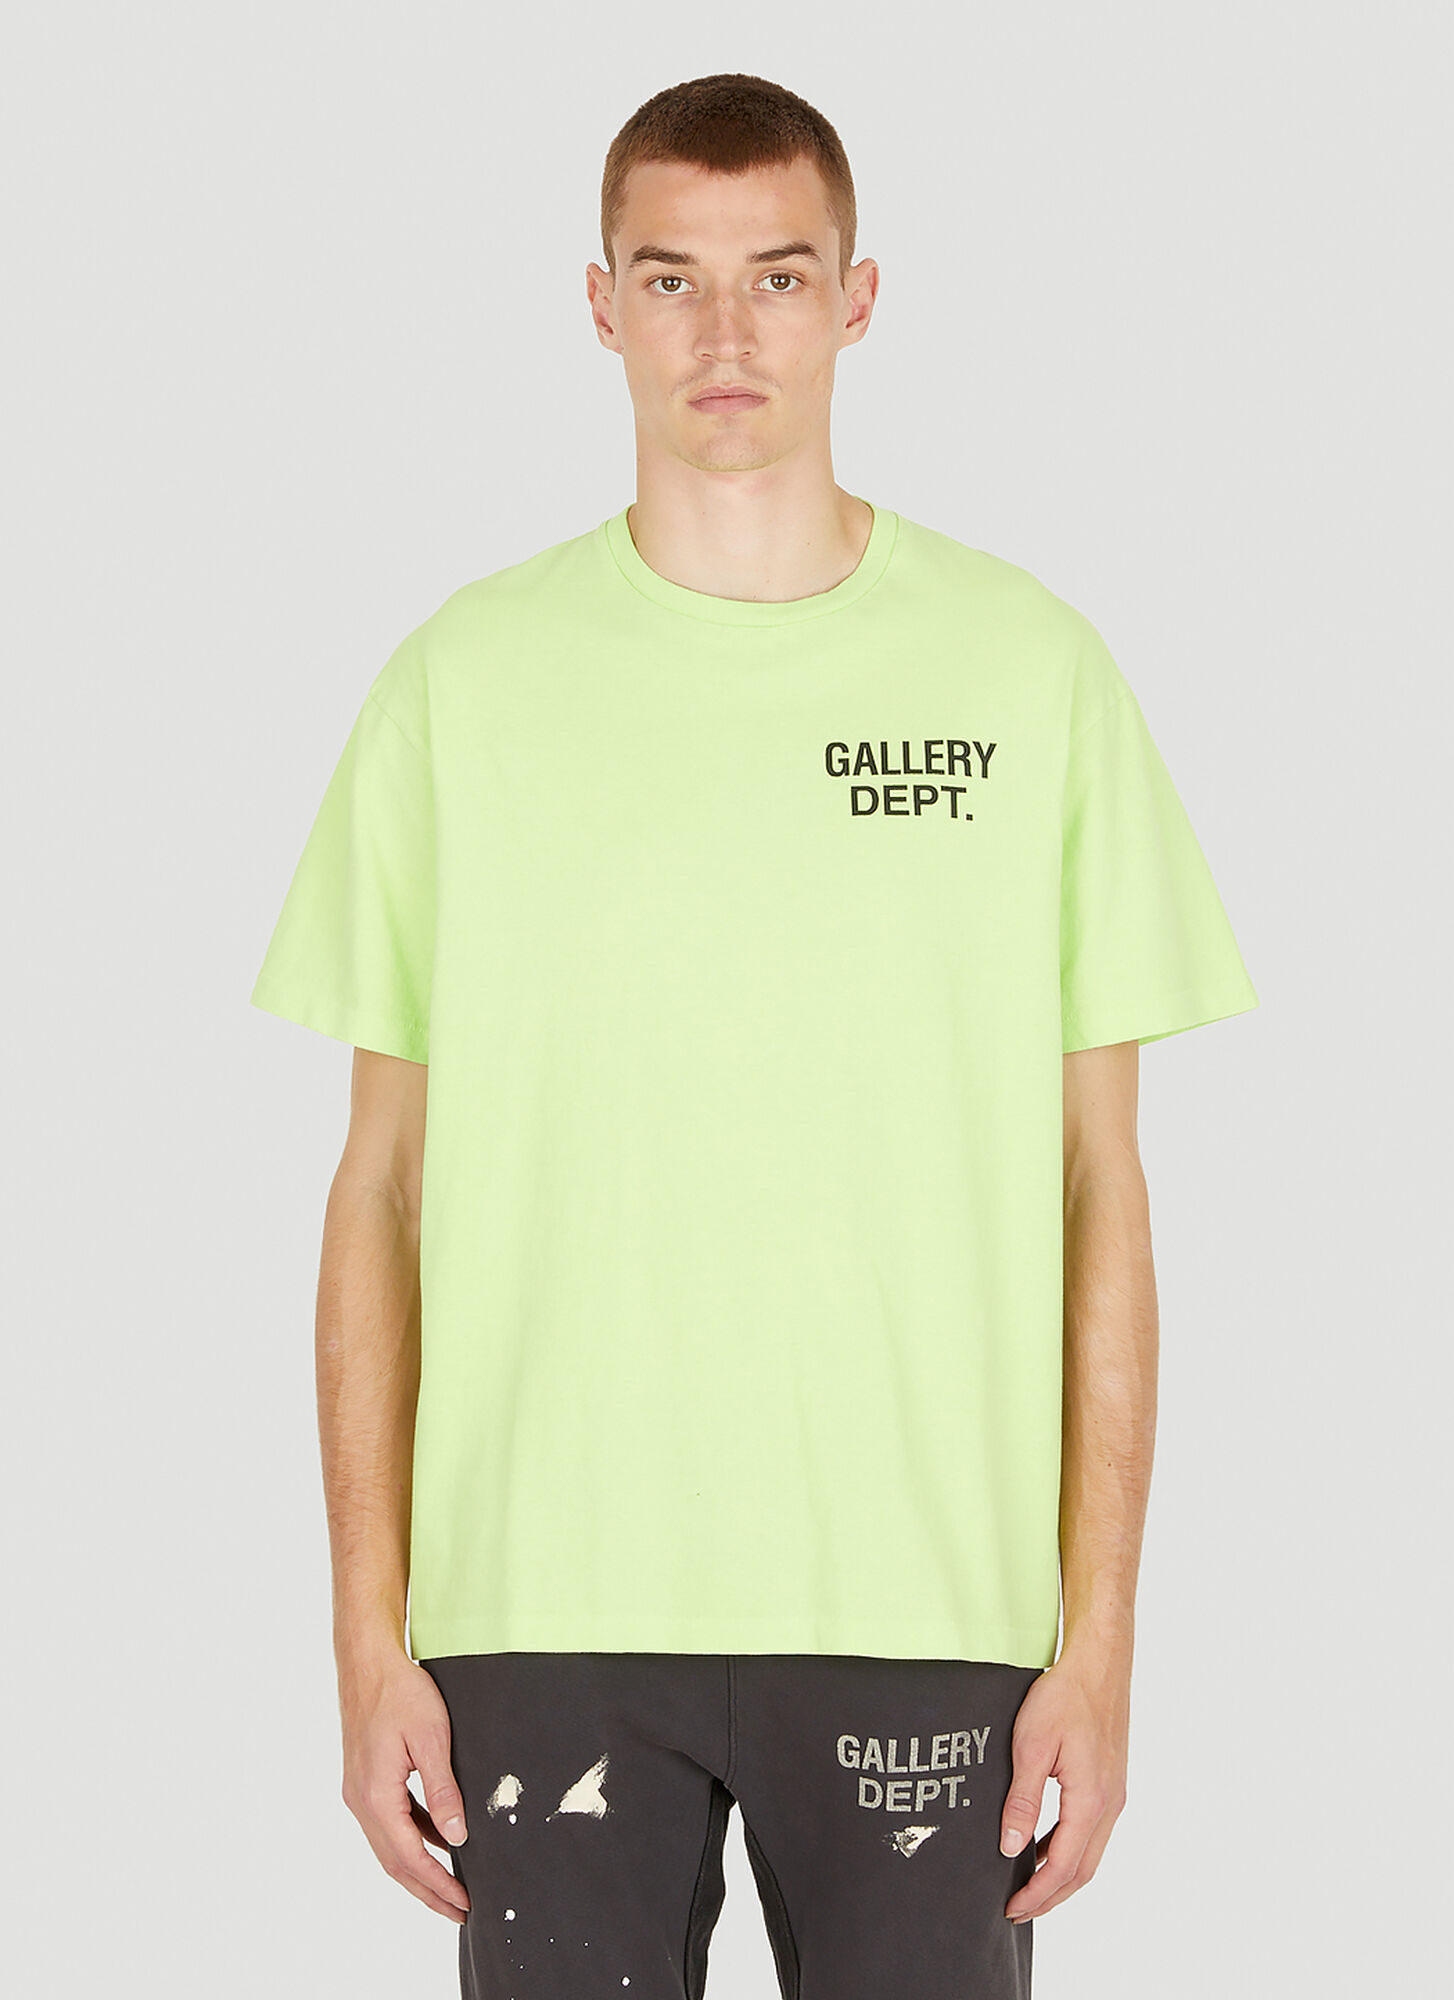 Gallery Dept. Souvenir T-shirt In Lime Green